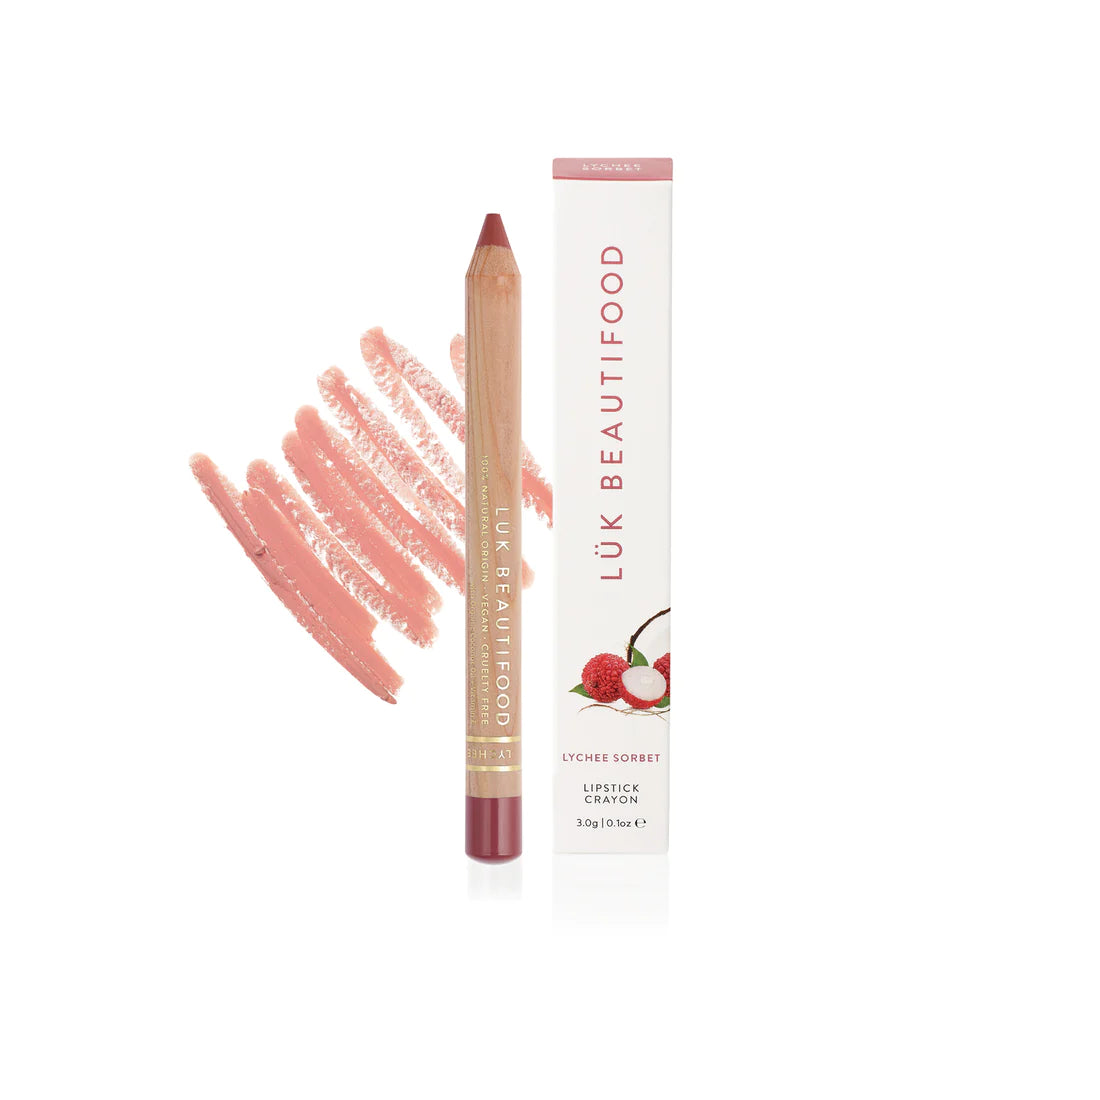 Natural Lipstick Crayon in Honey Peach